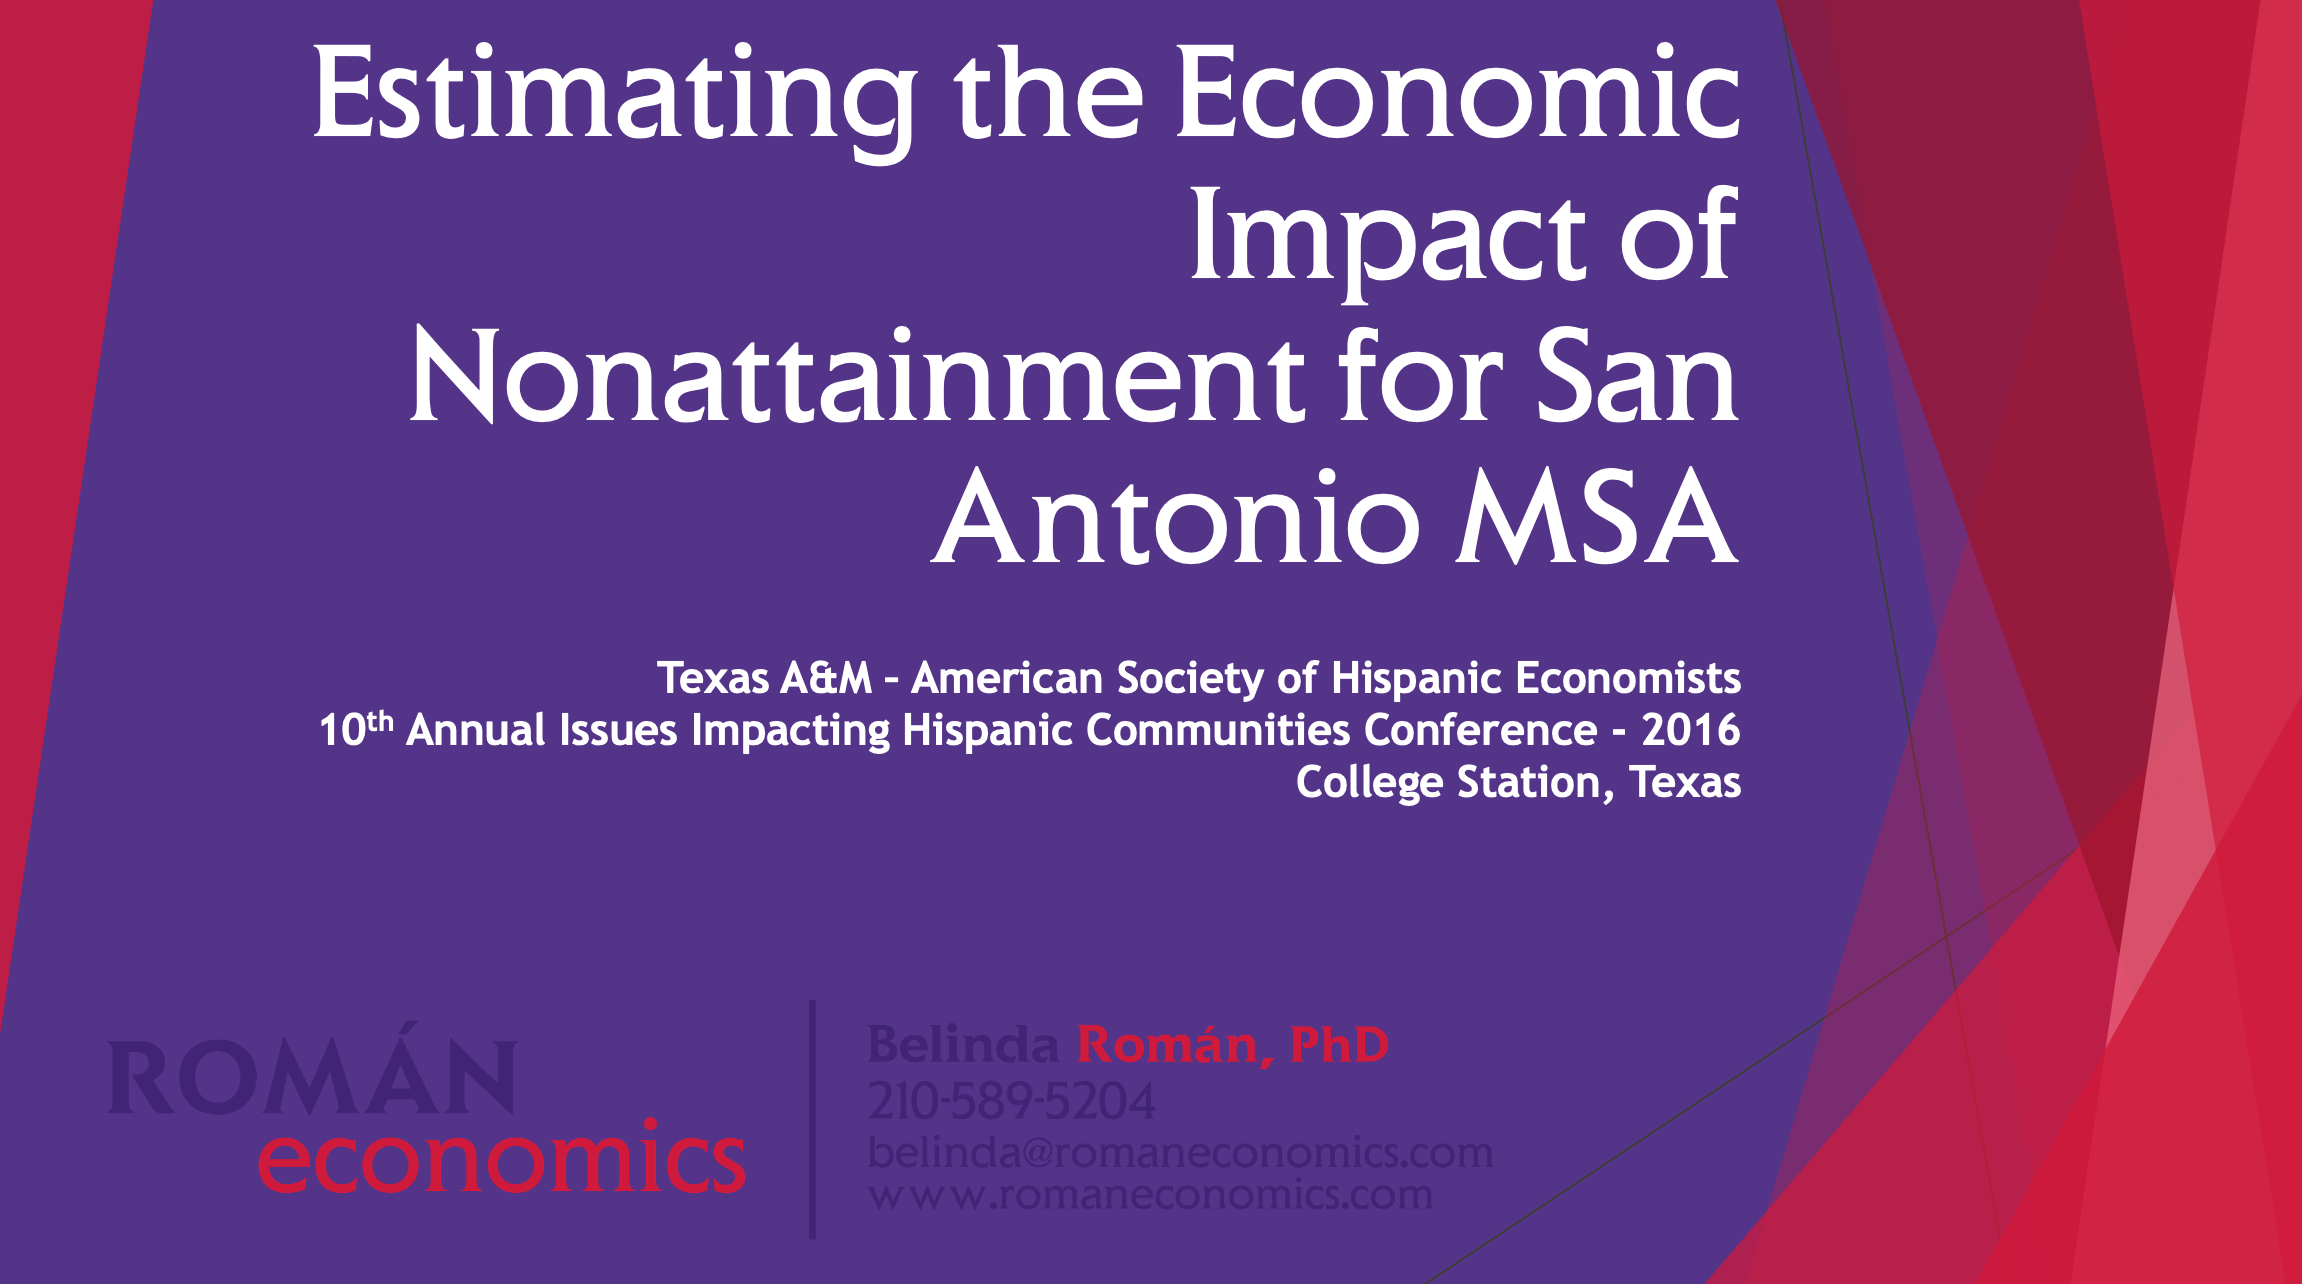 Estimating the Economic Impact of Nonattainment for San Antonio MSA